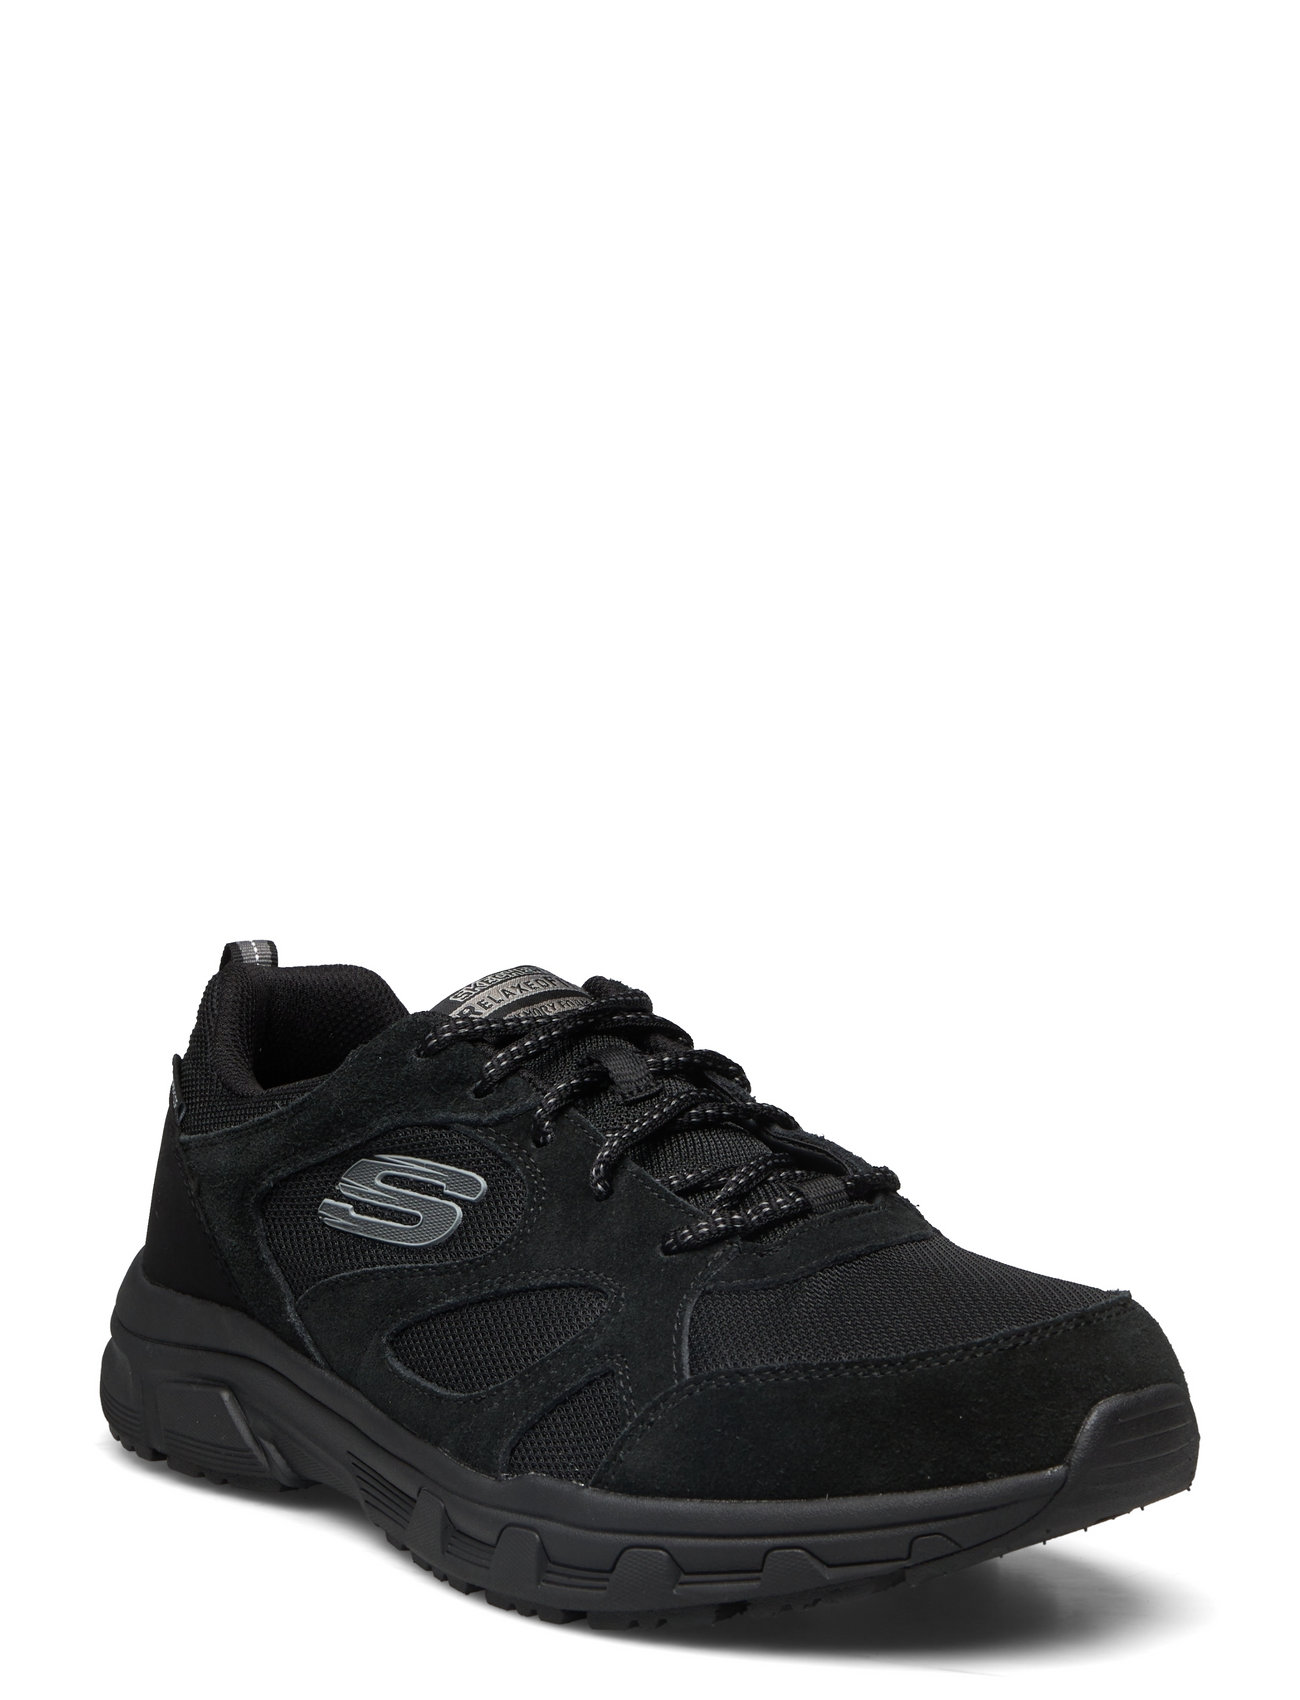 Mens Relaxed Fit: Oak Canyon Sunfair - Waterproof Low-top Sneakers Black Skechers